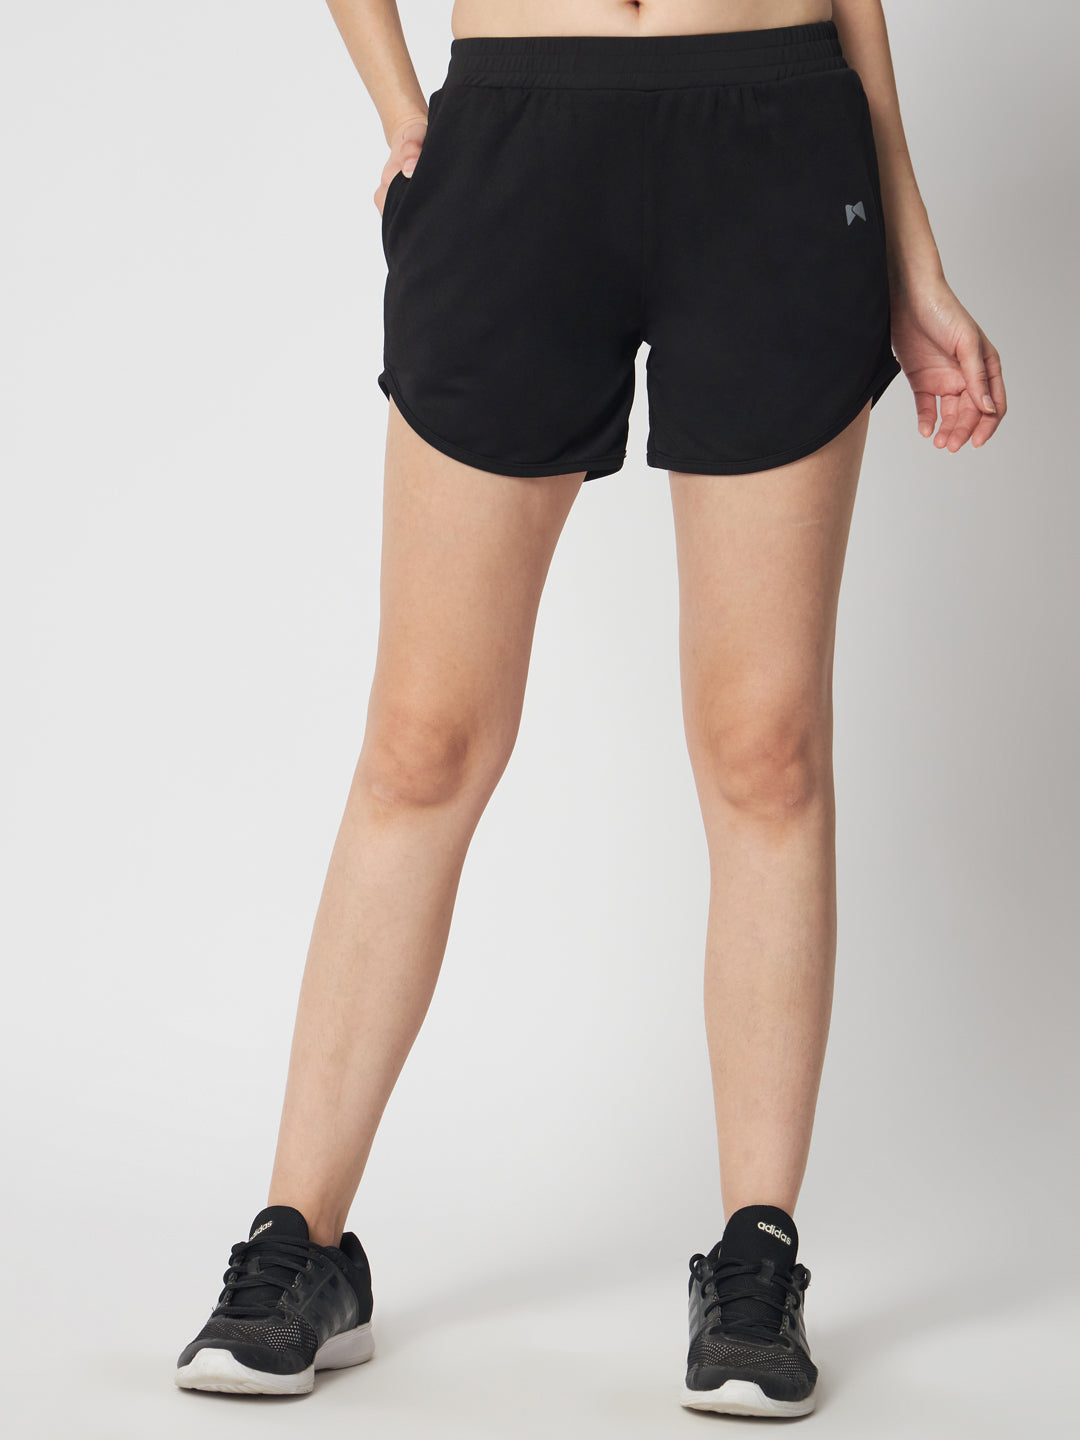 Pocket Stride Shorts-Black